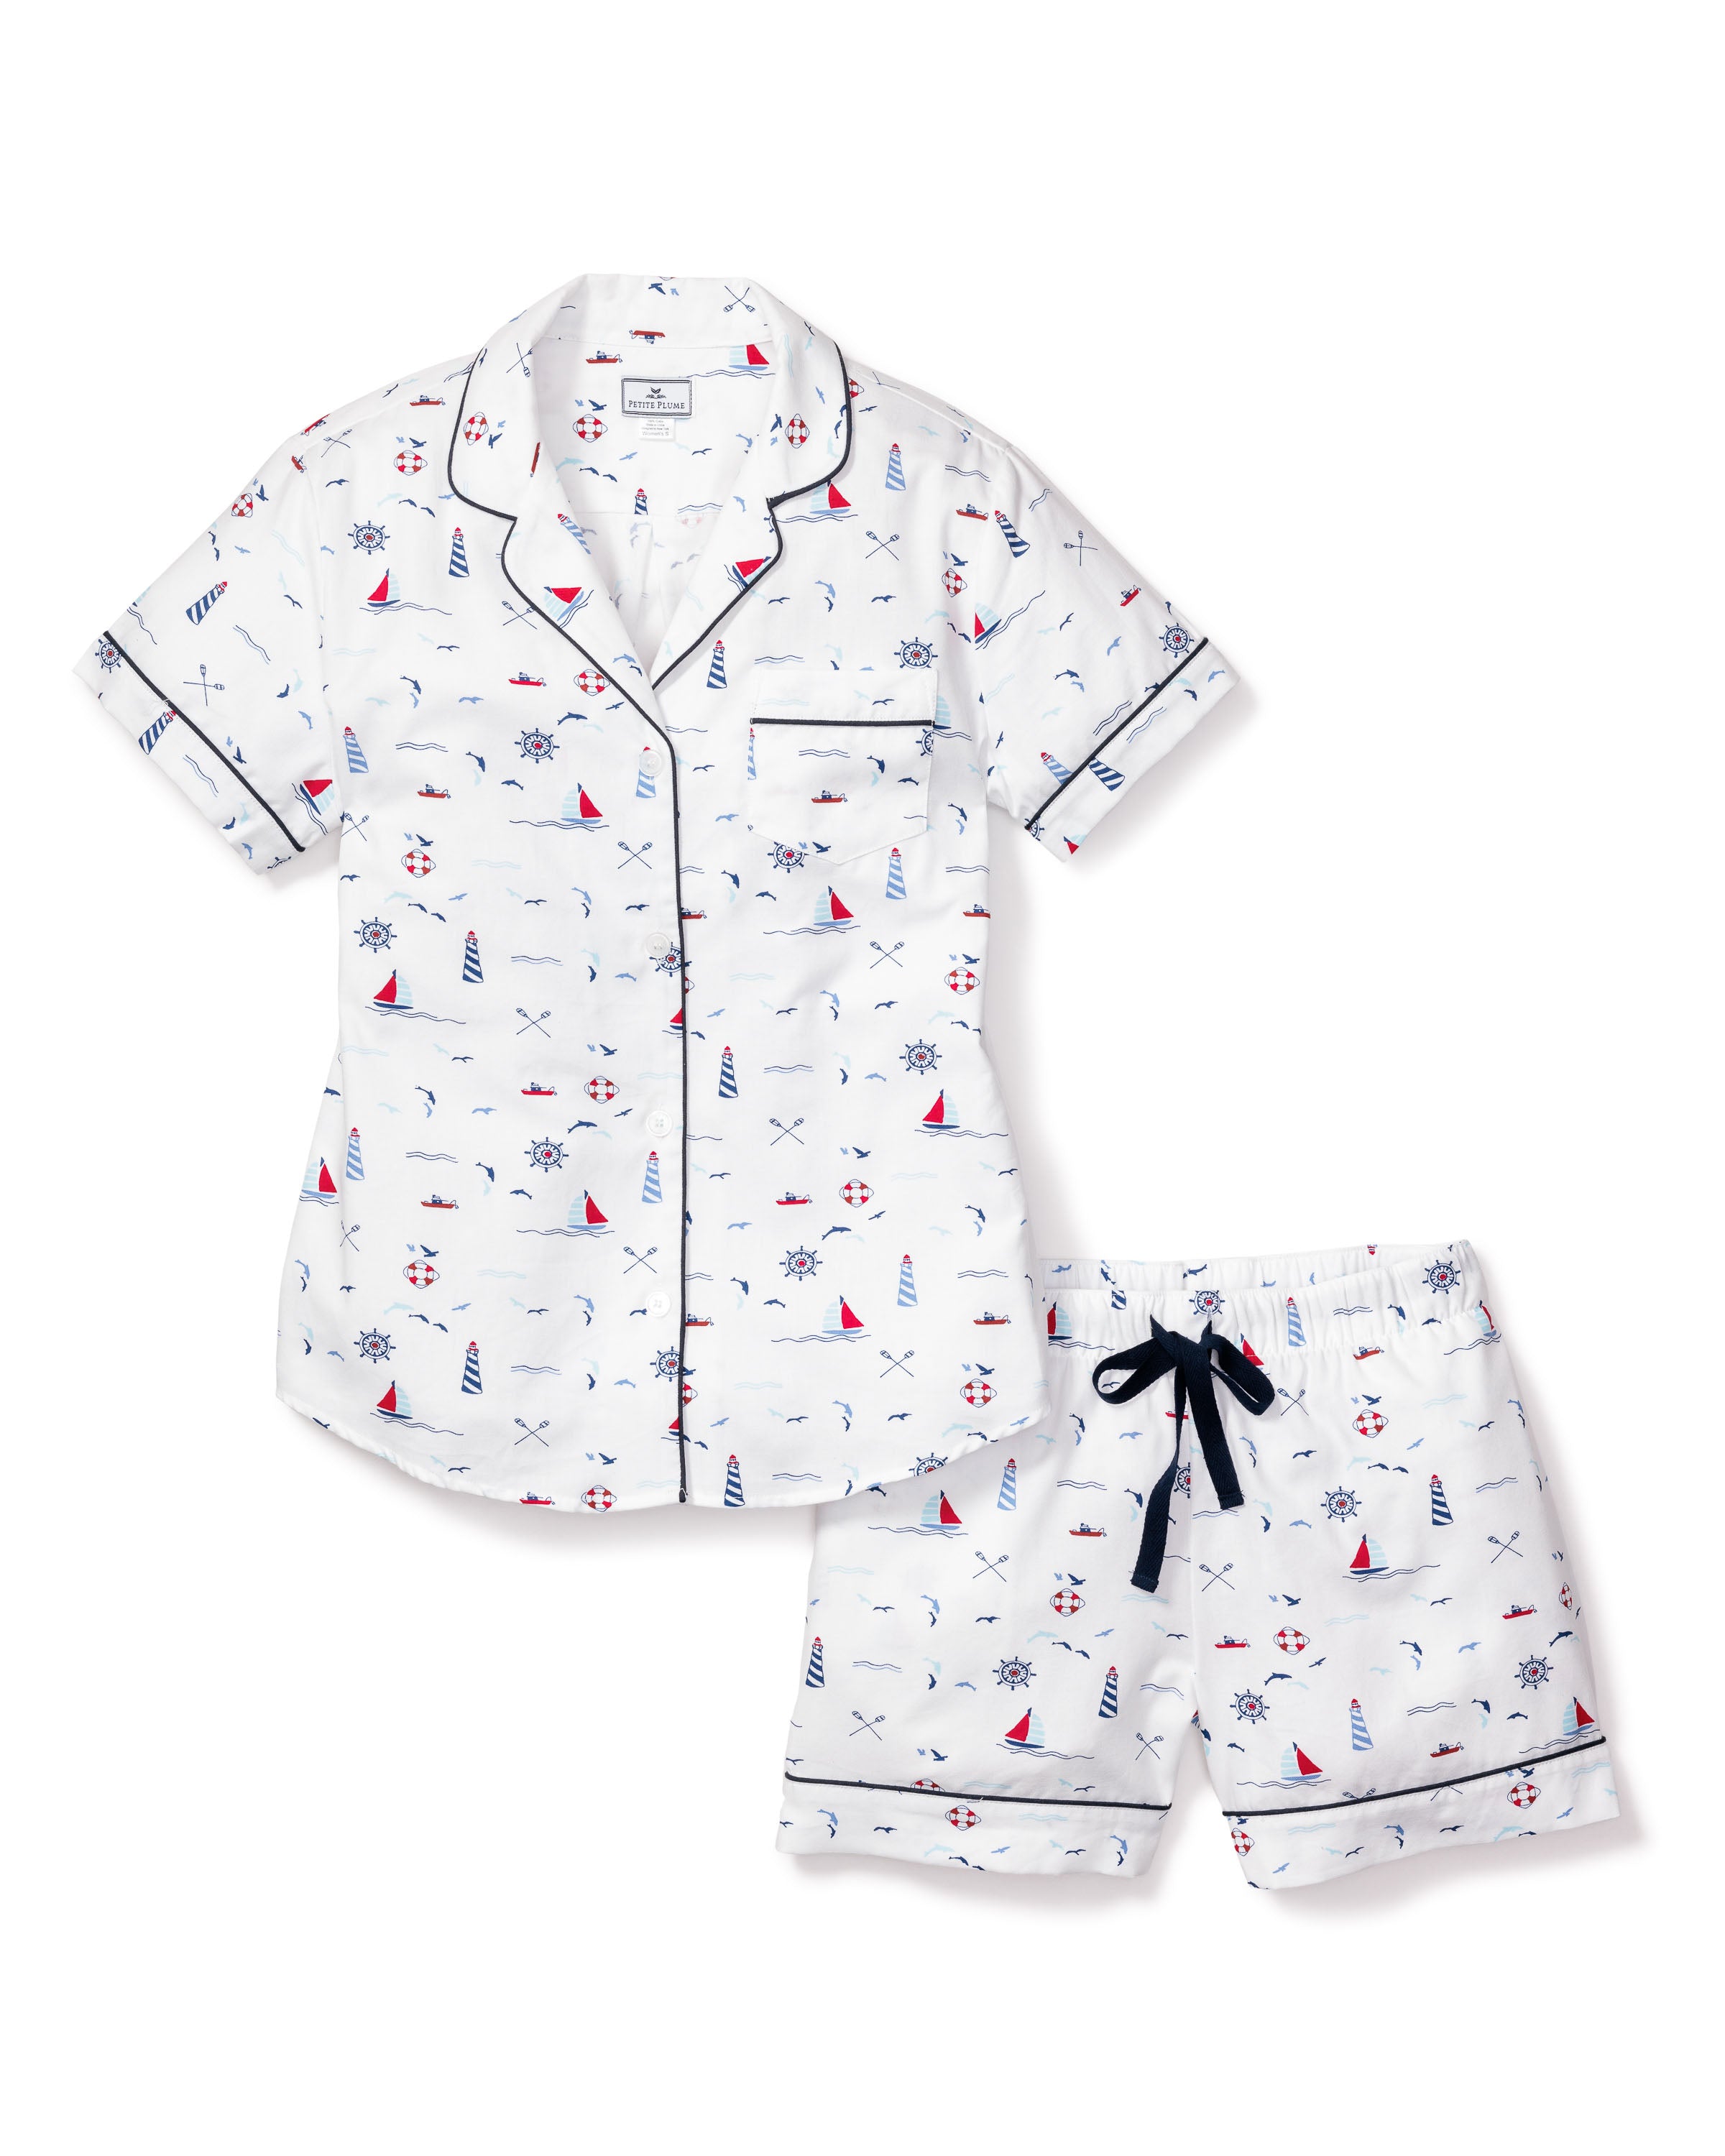 Women's Twill Pajama Short Sleeve Short Set in Sail Away